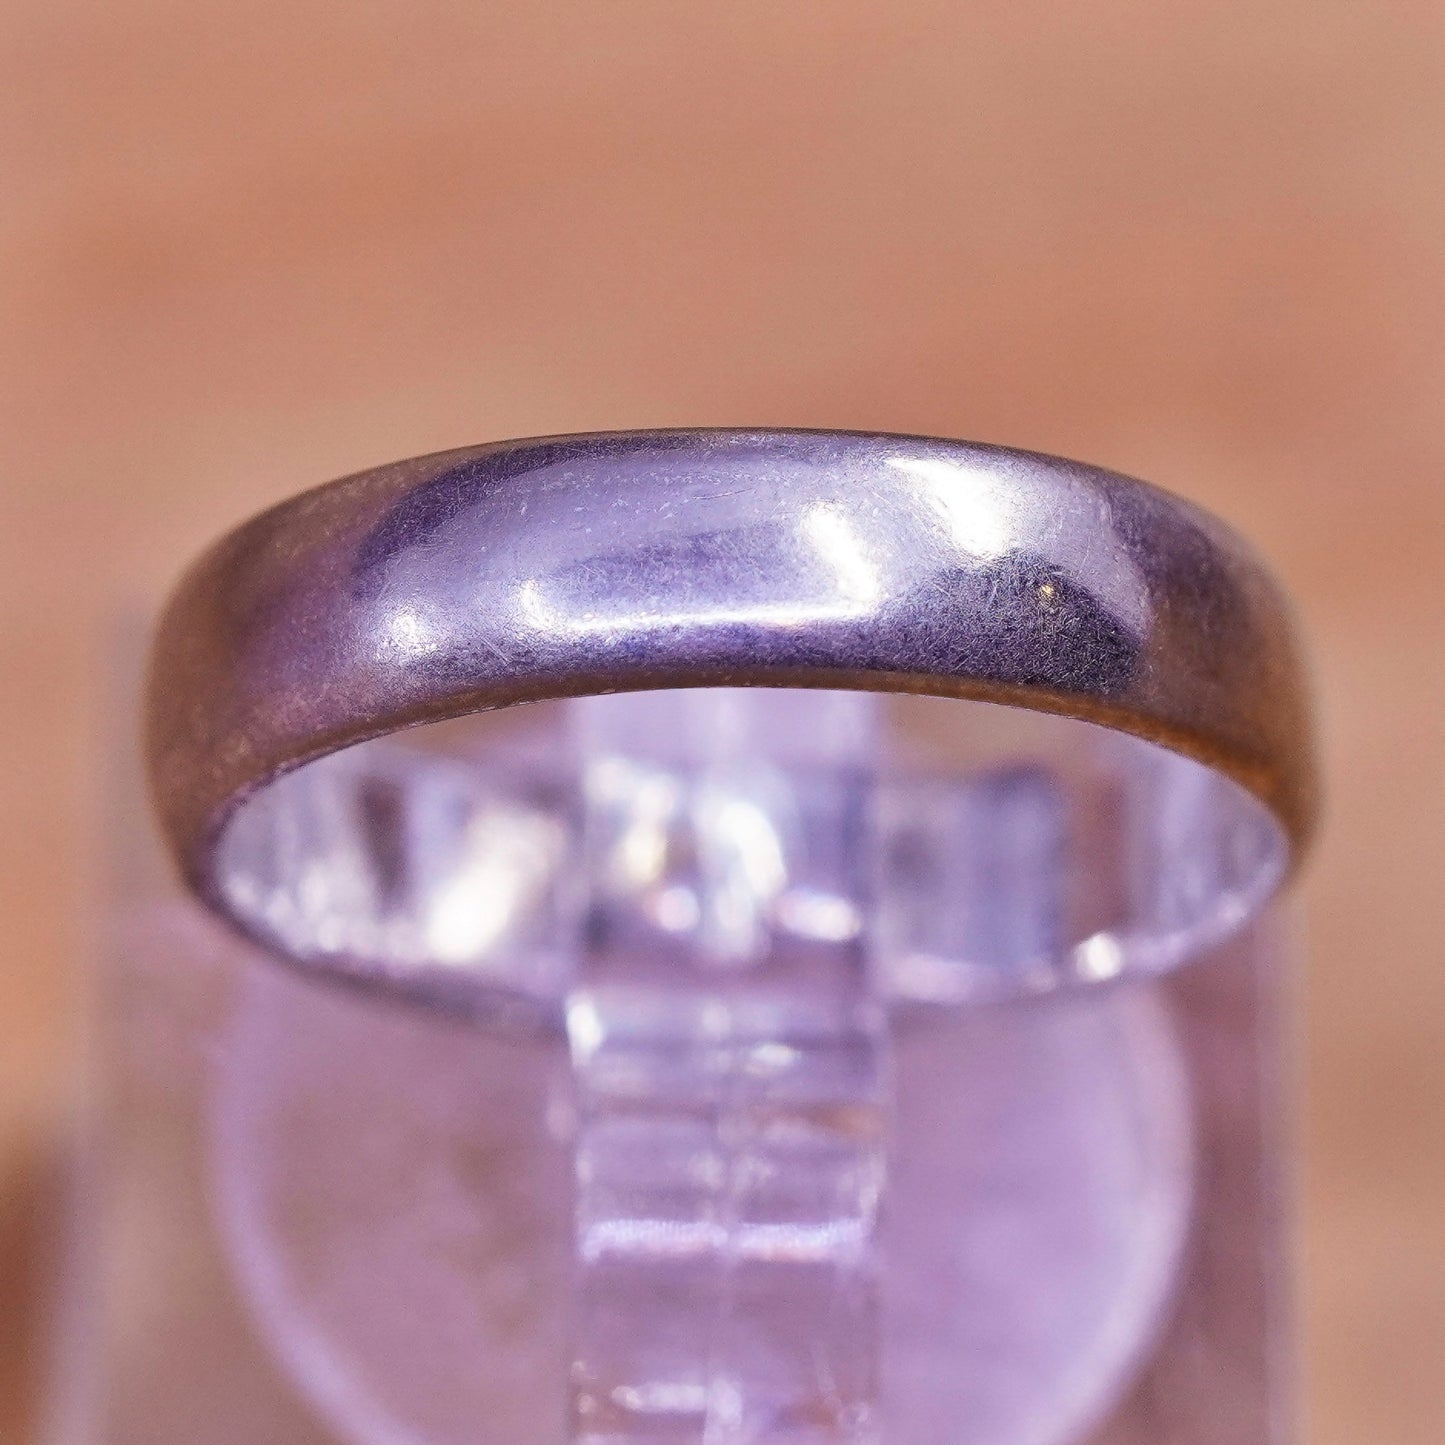 Size 5.25, vintage silpada sterling silver handmade ring. 925 wedding ring